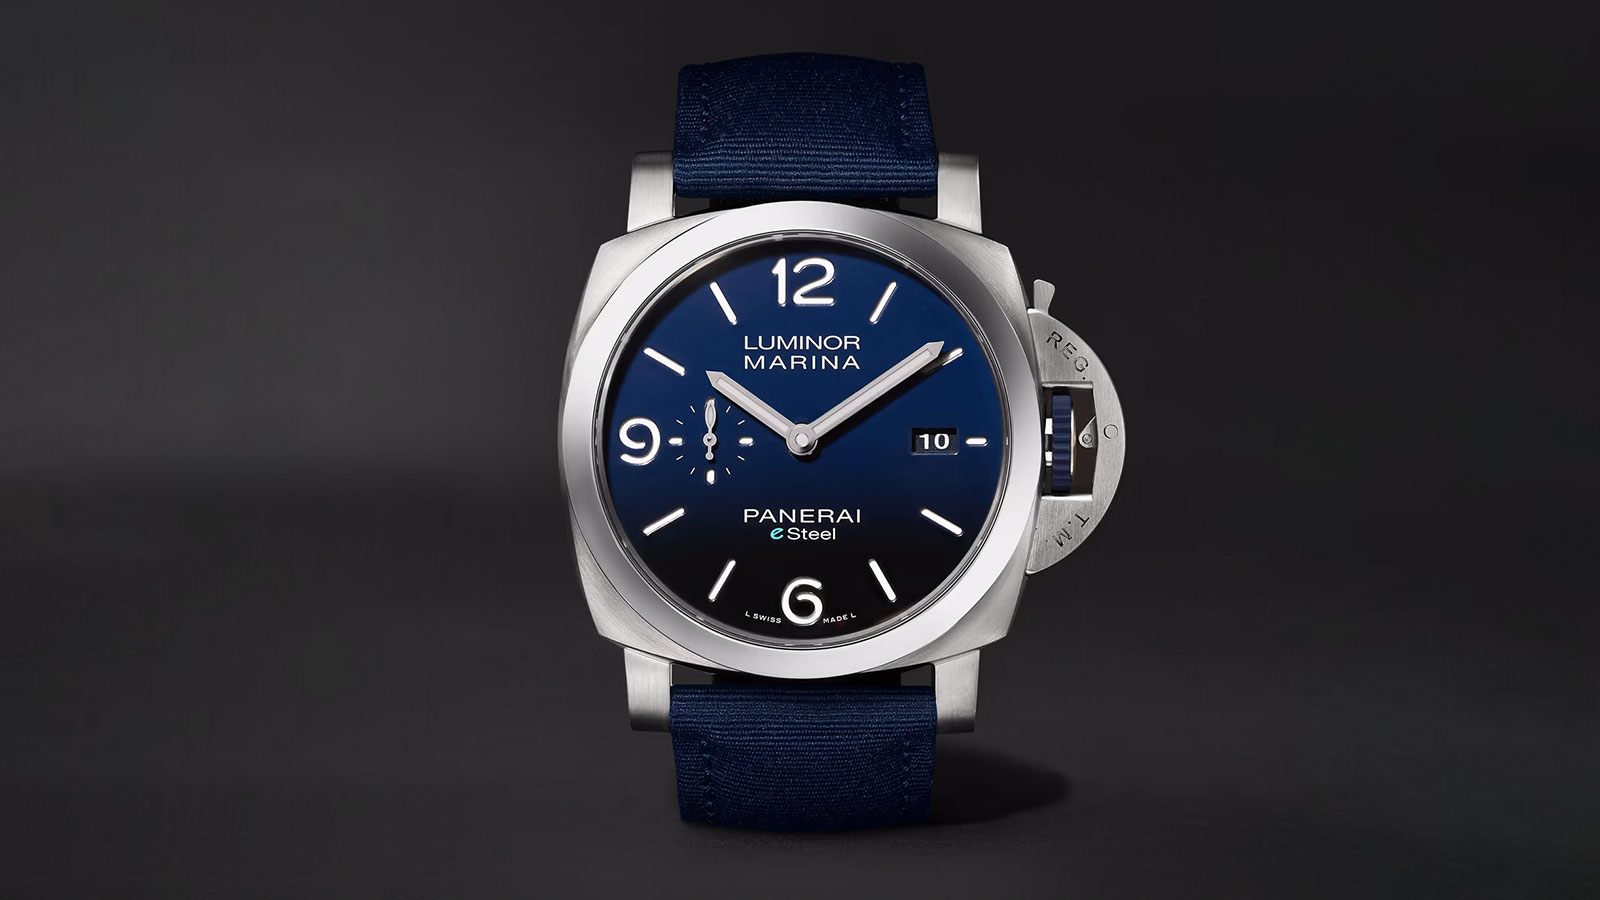 A sustainable luxury watch on a dark background